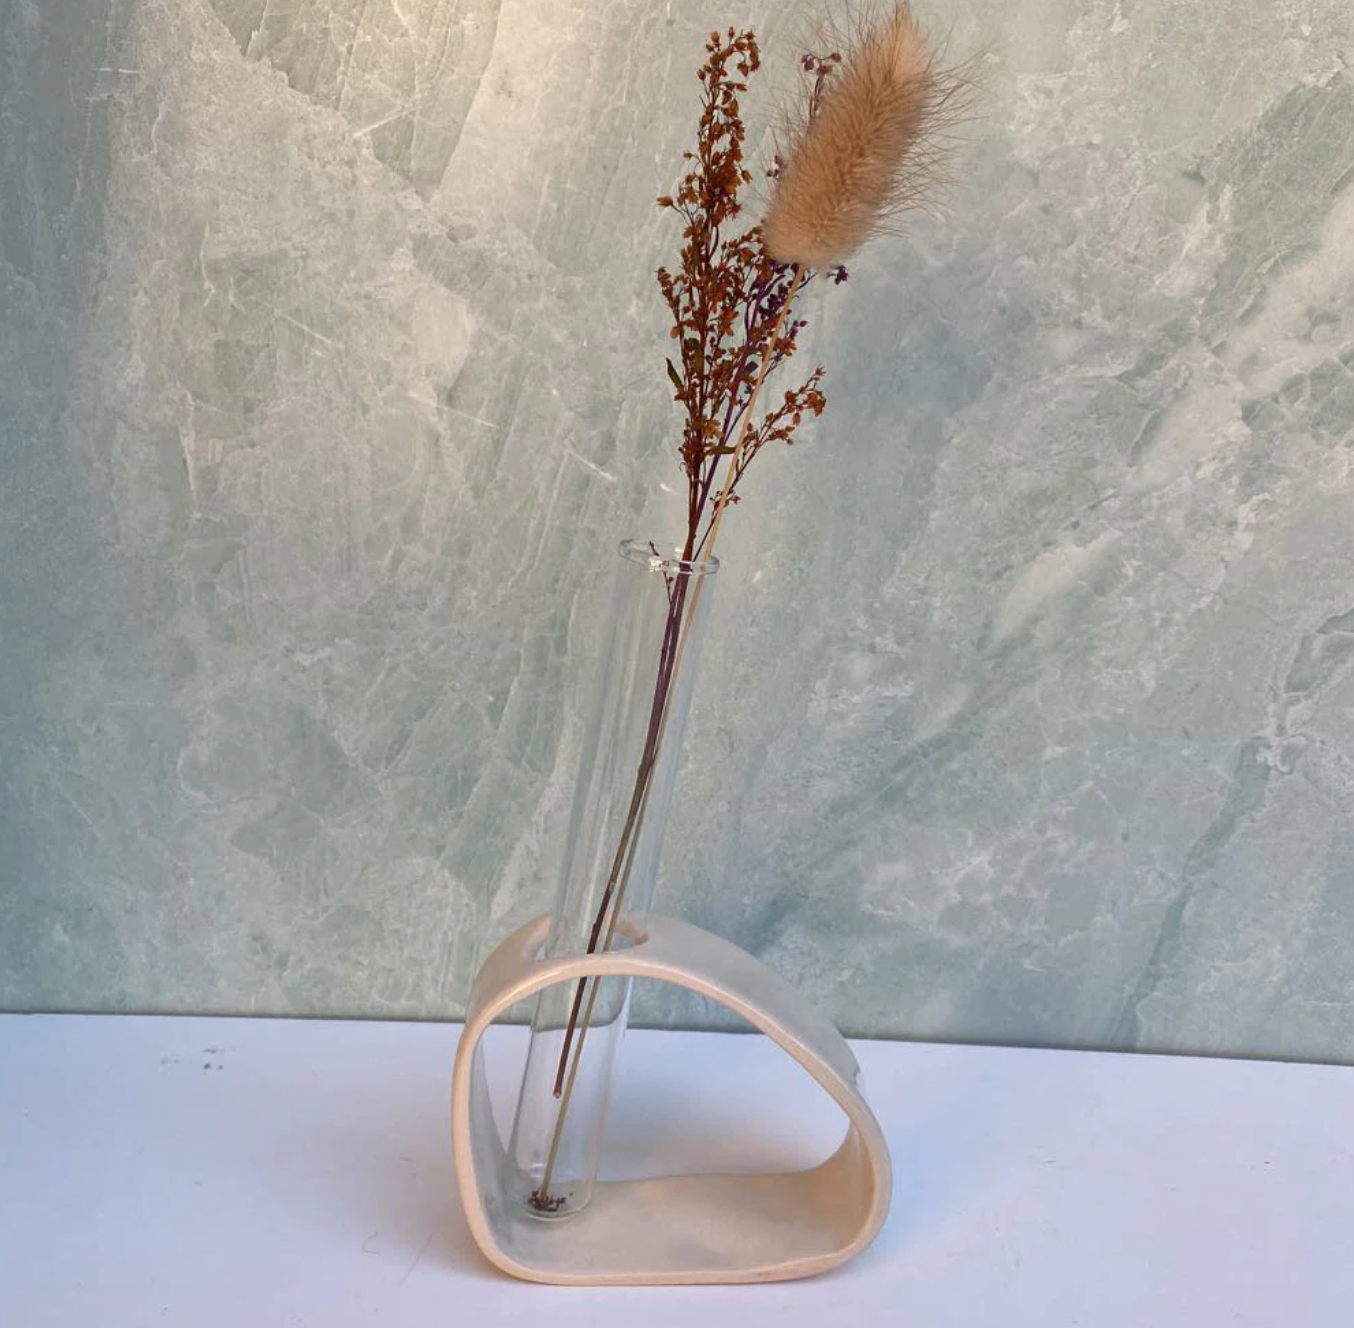 Organic shaped vase by Everlasting Pottery